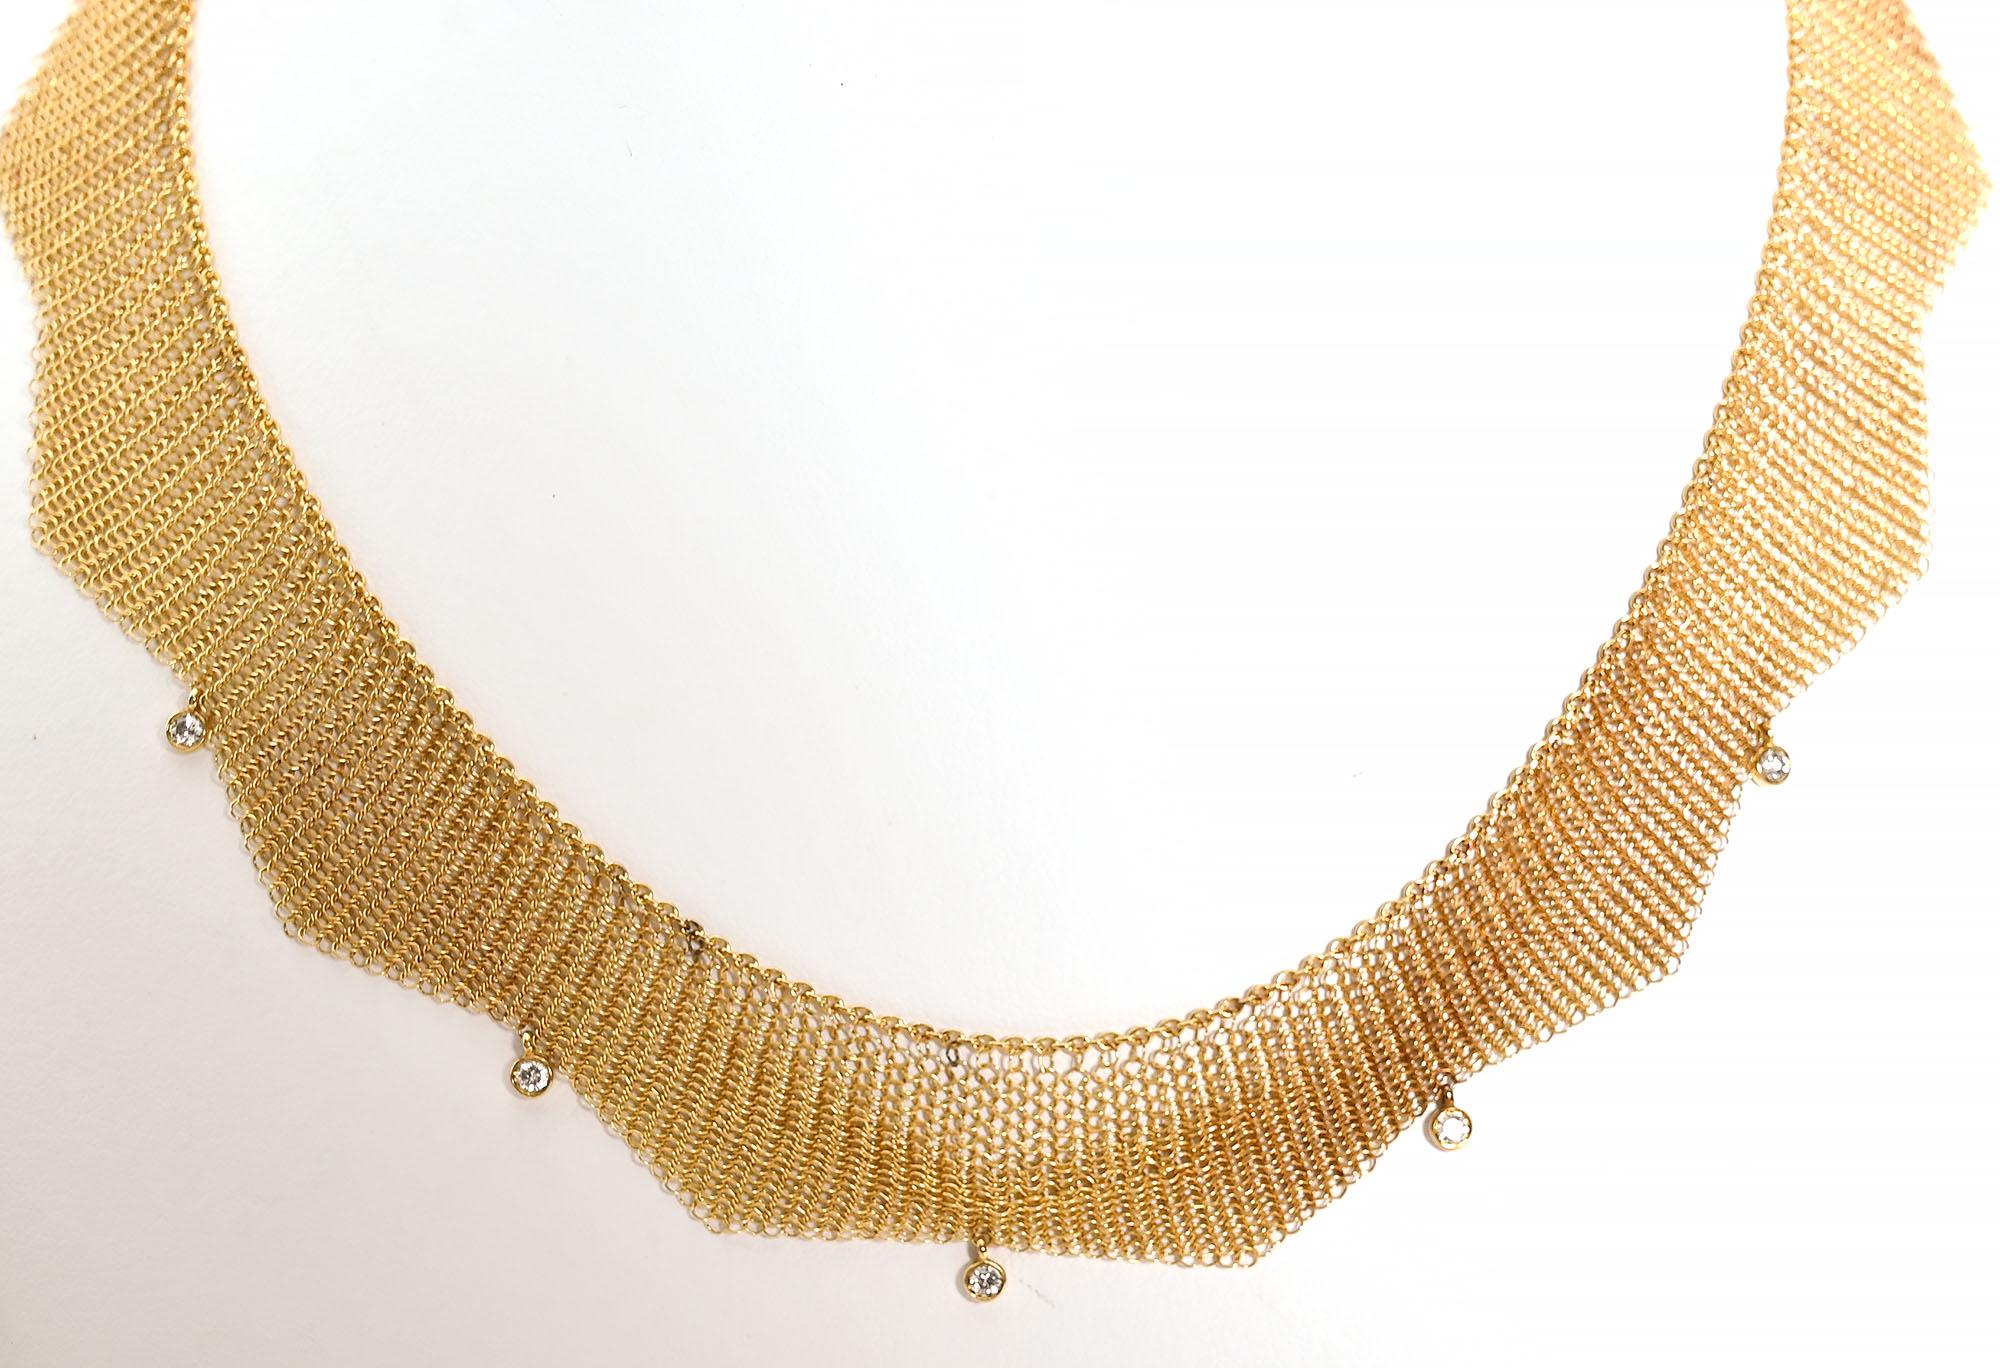 Brilliant Cut Tiffany & Co. Gold Mesh Necklace with Diamonds